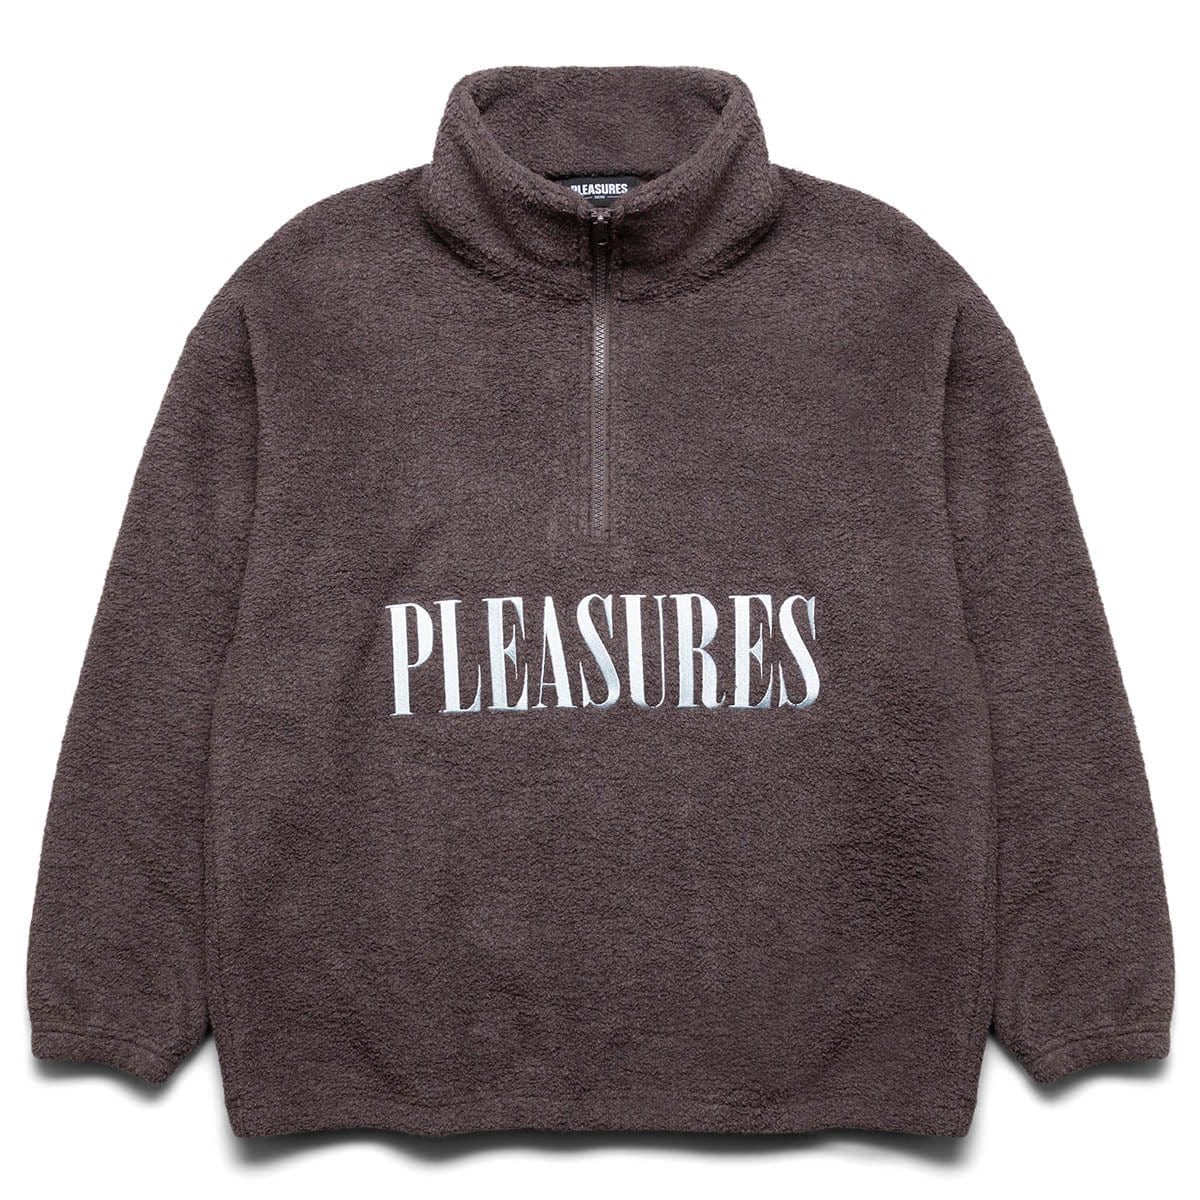 Pleasures Hoodies & Sweatshirts SEARCHING QUARTER ZIP